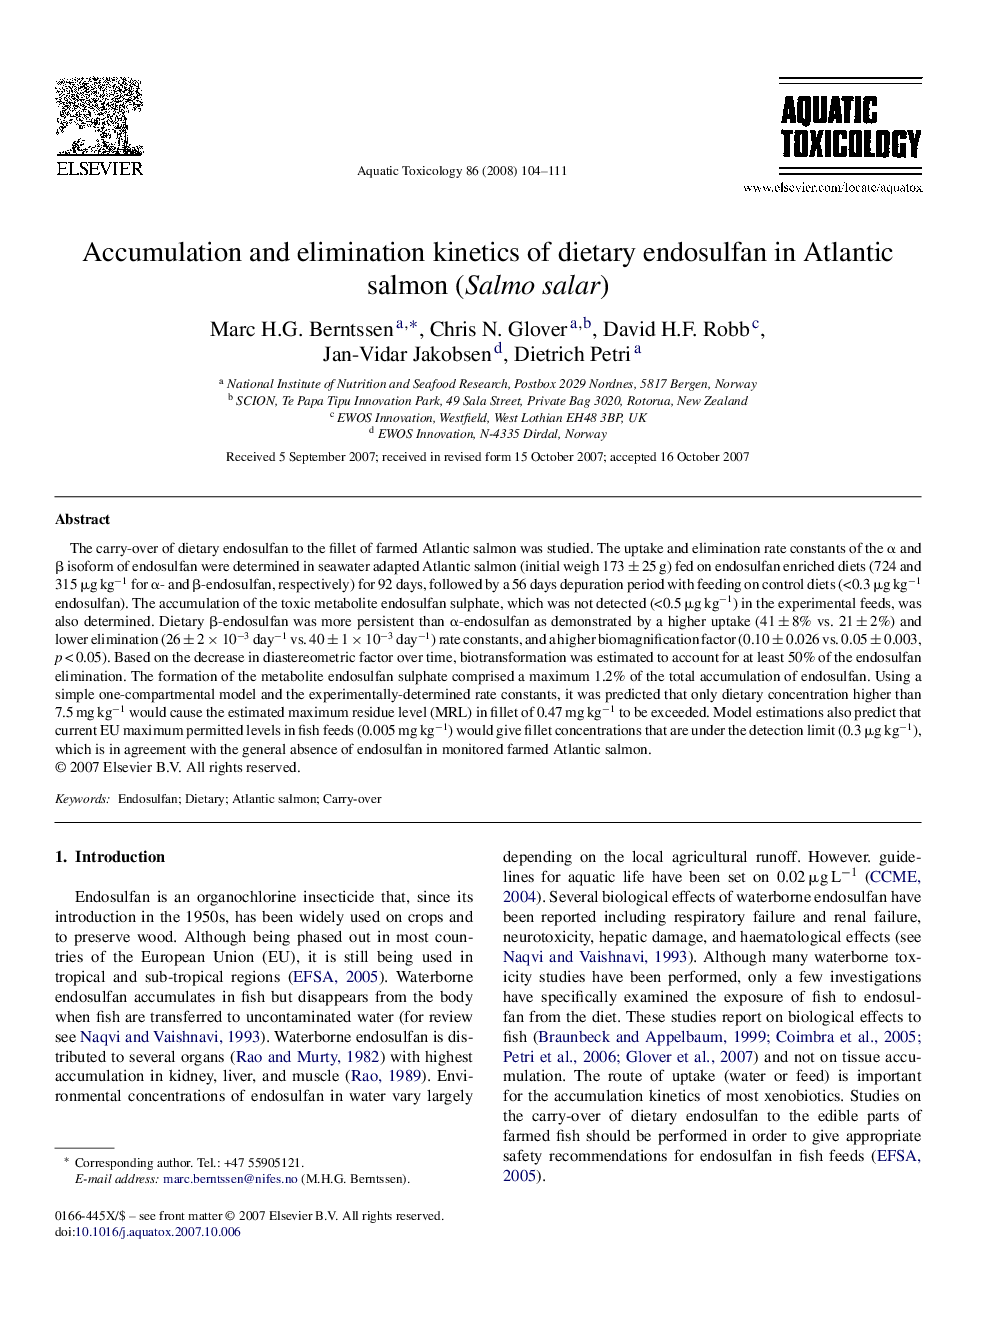 Accumulation and elimination kinetics of dietary endosulfan in Atlantic salmon (Salmo salar)